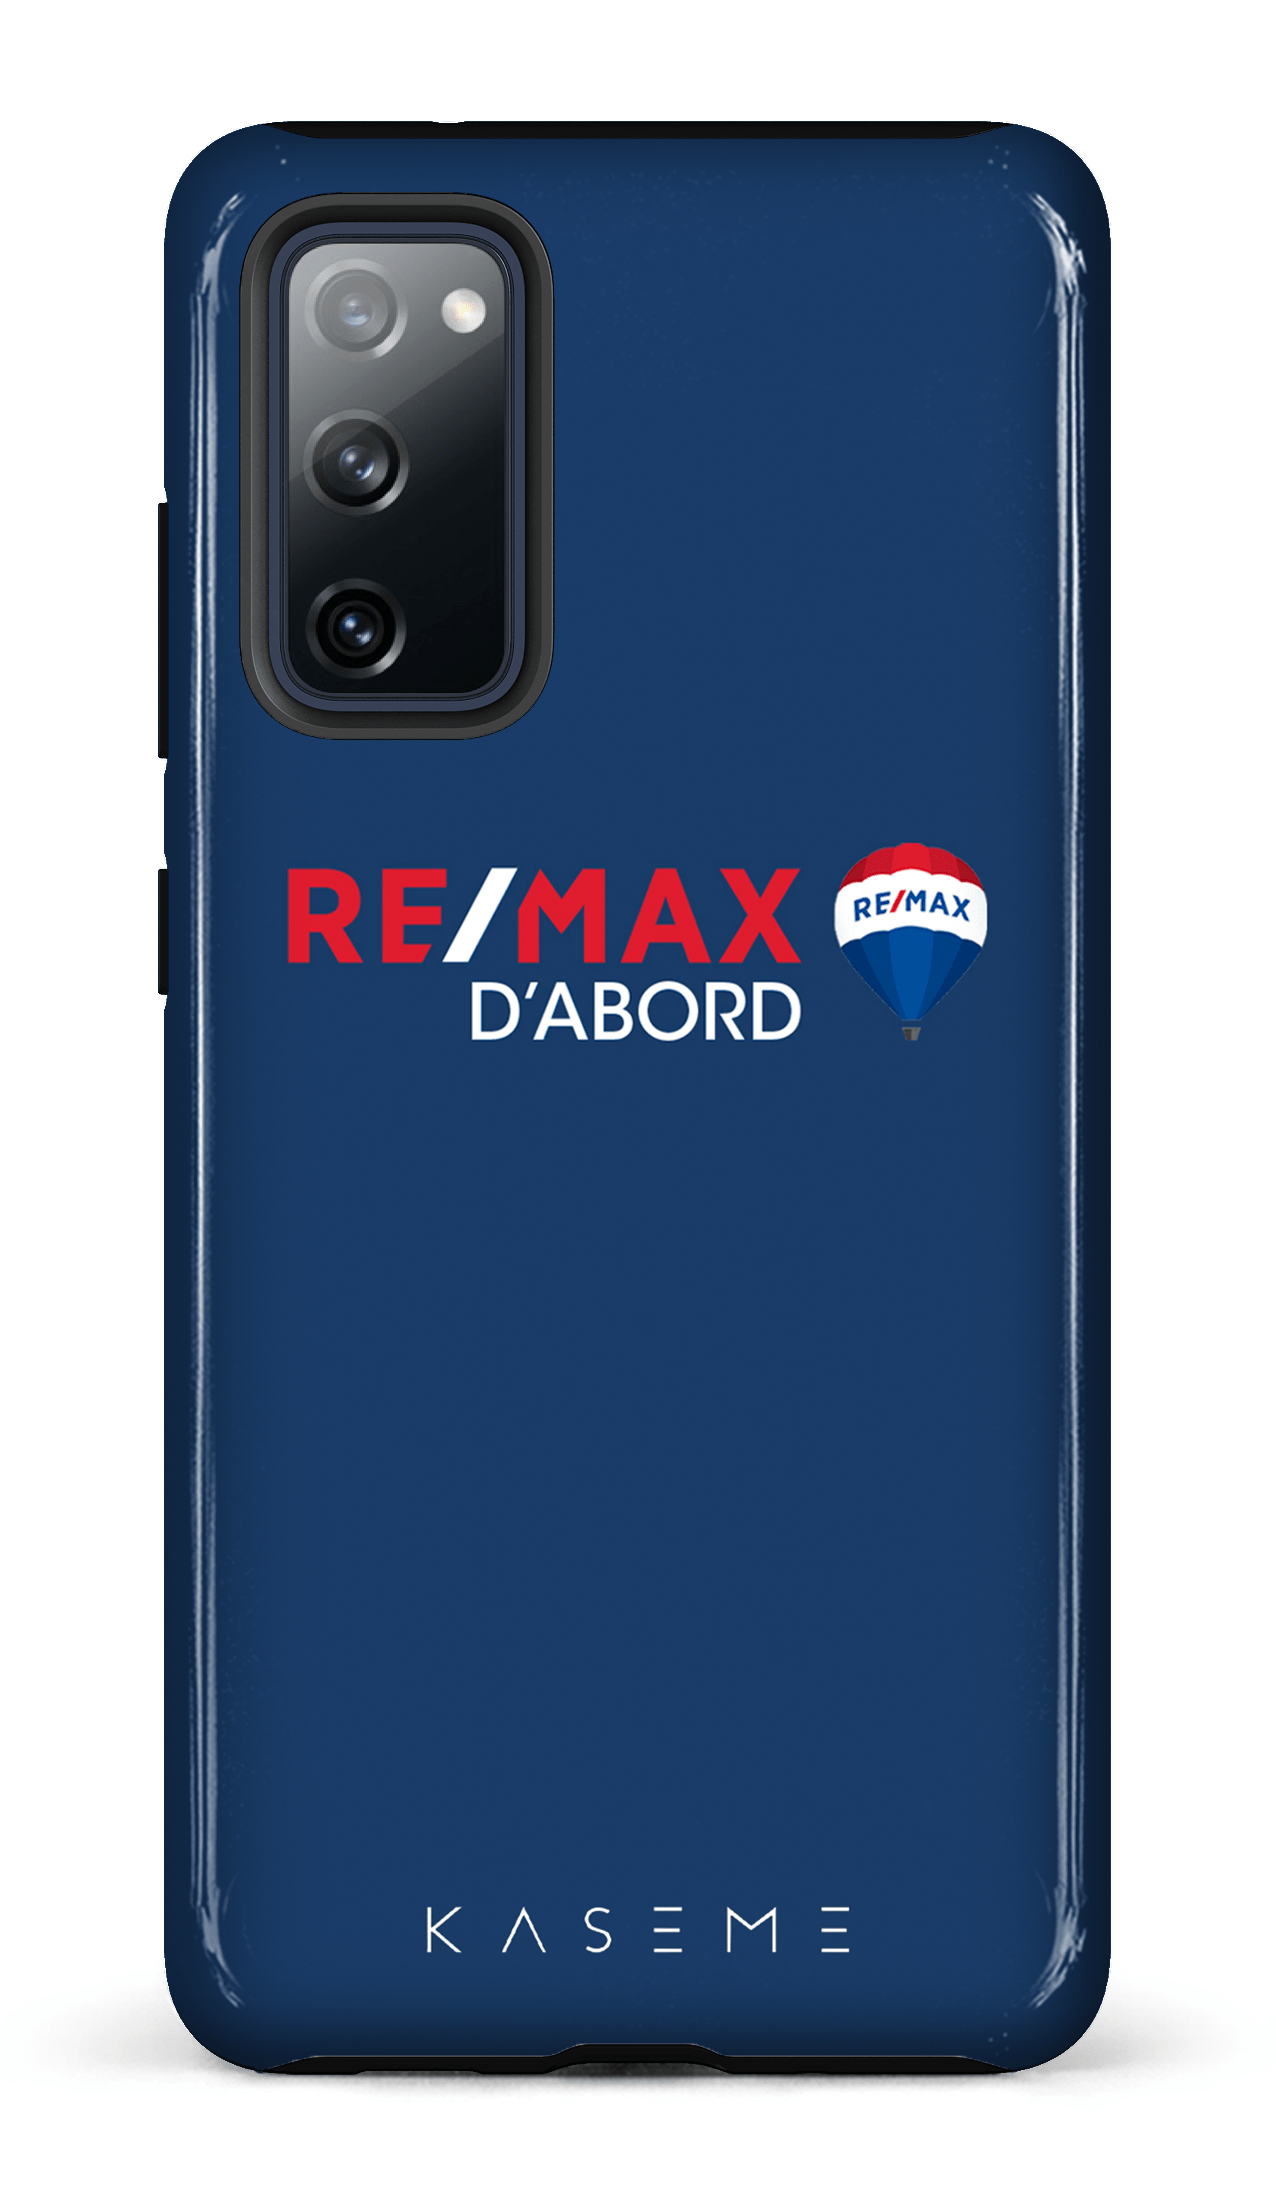 Remax D'abord Bleu - Galaxy S20 FE